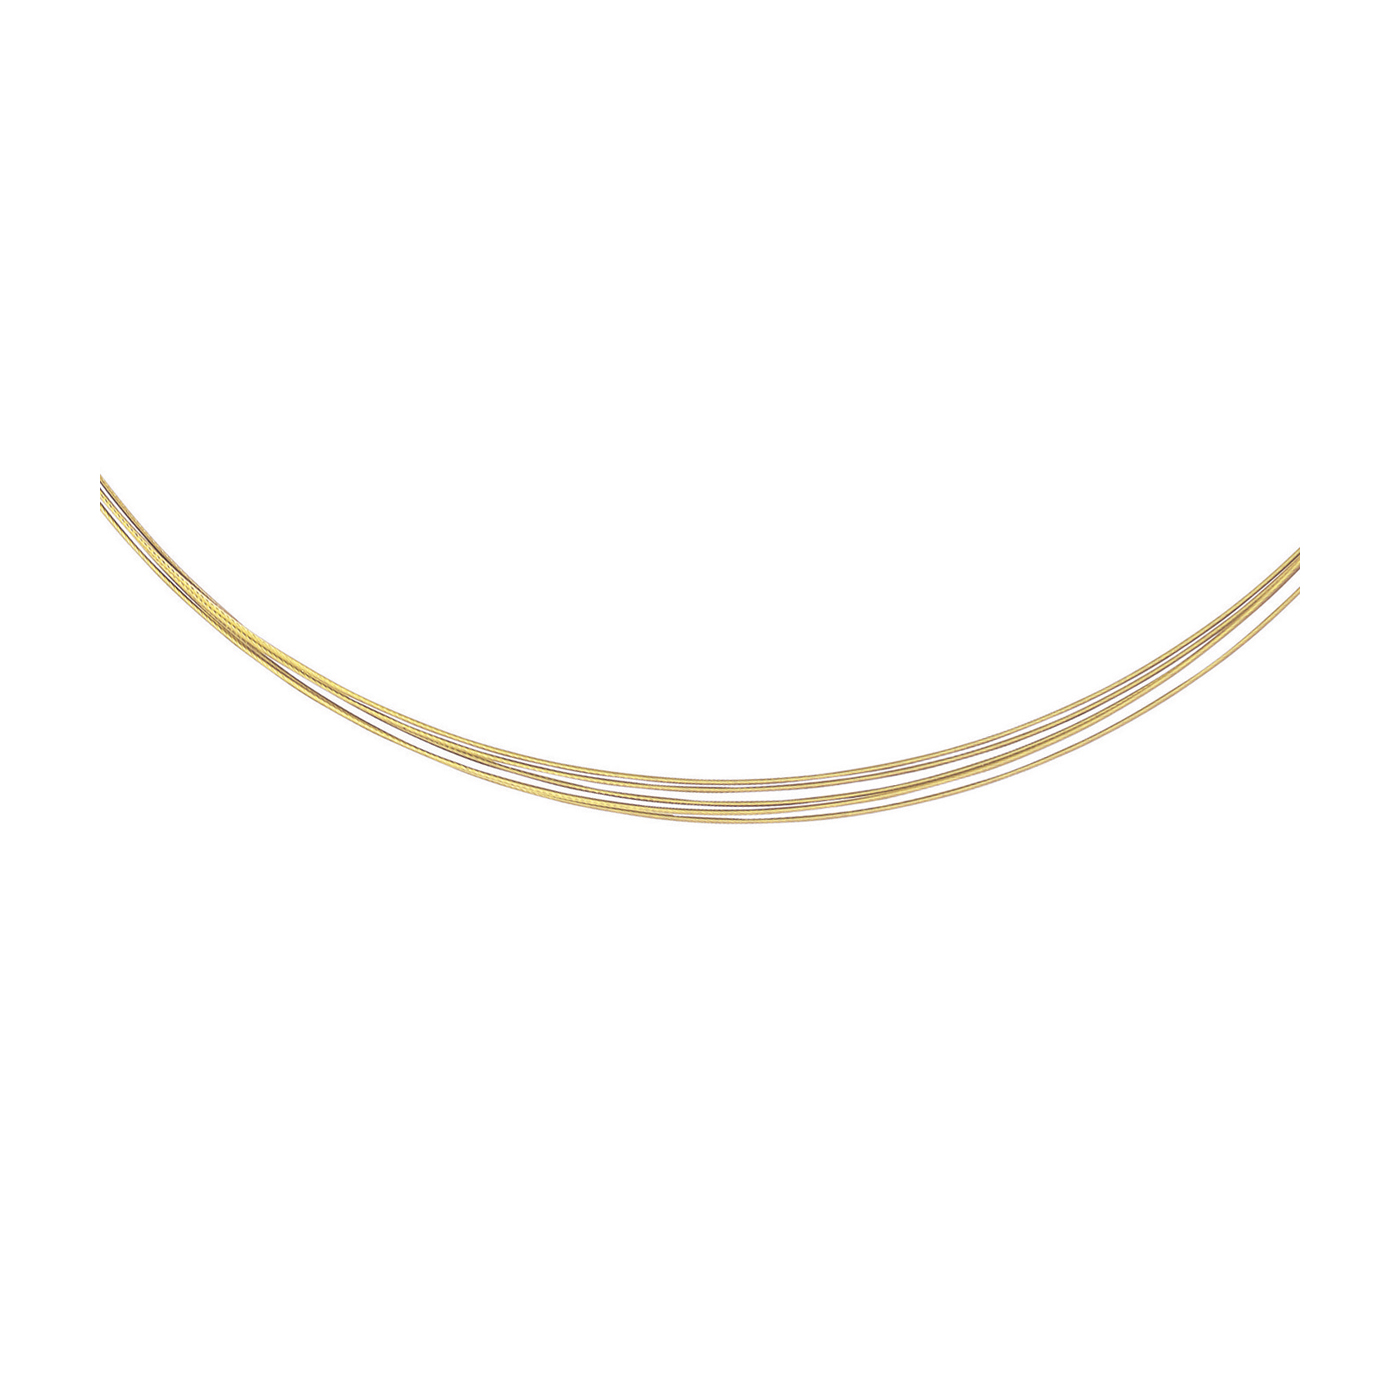 Rope Necklace, Golden Metallic, 5 Rows, 45 cm - 1 piece